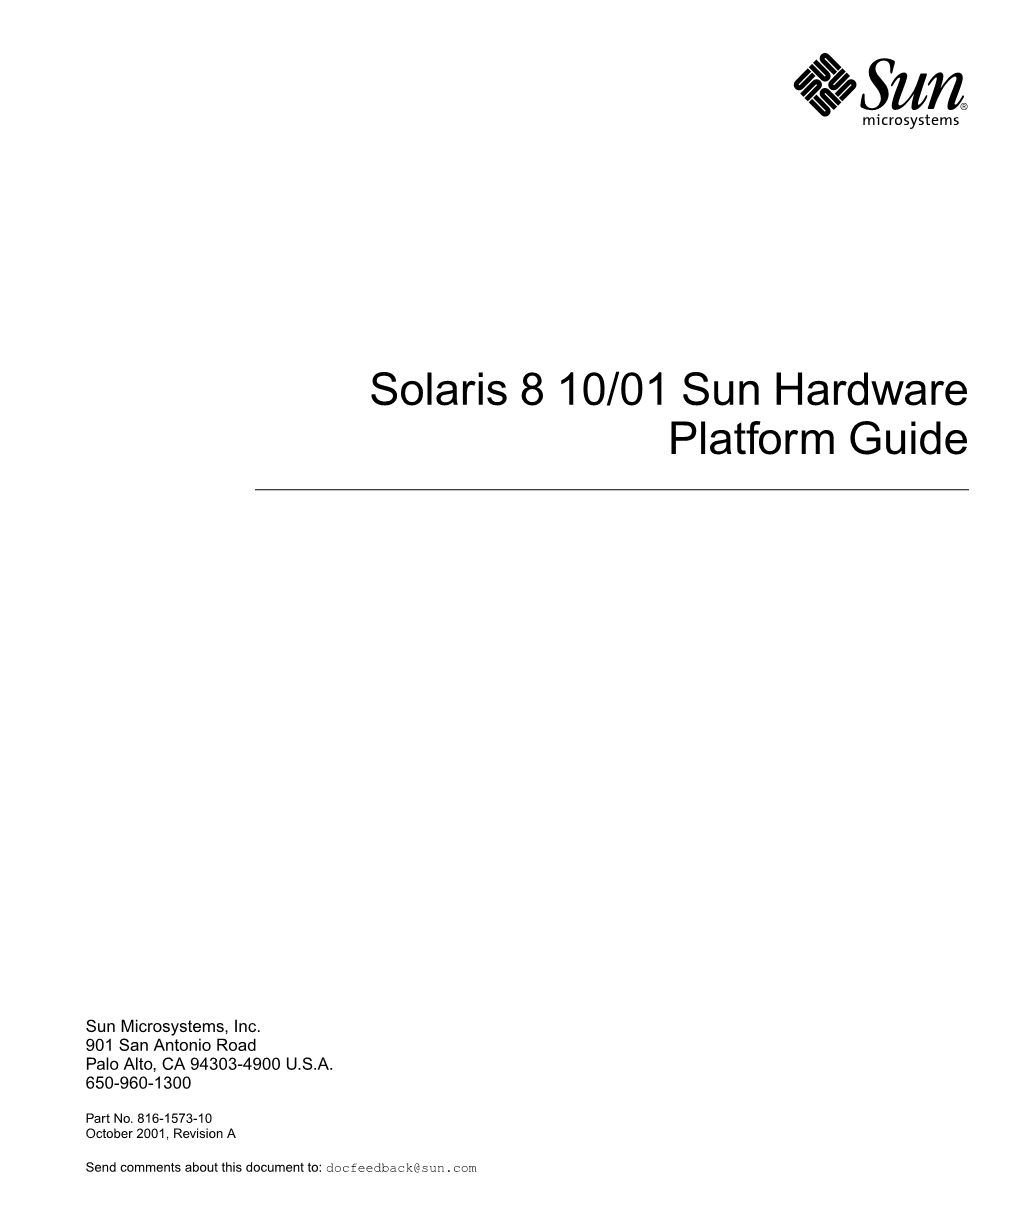 Solaris 8 10/01 Sun Hardware Platform Guide